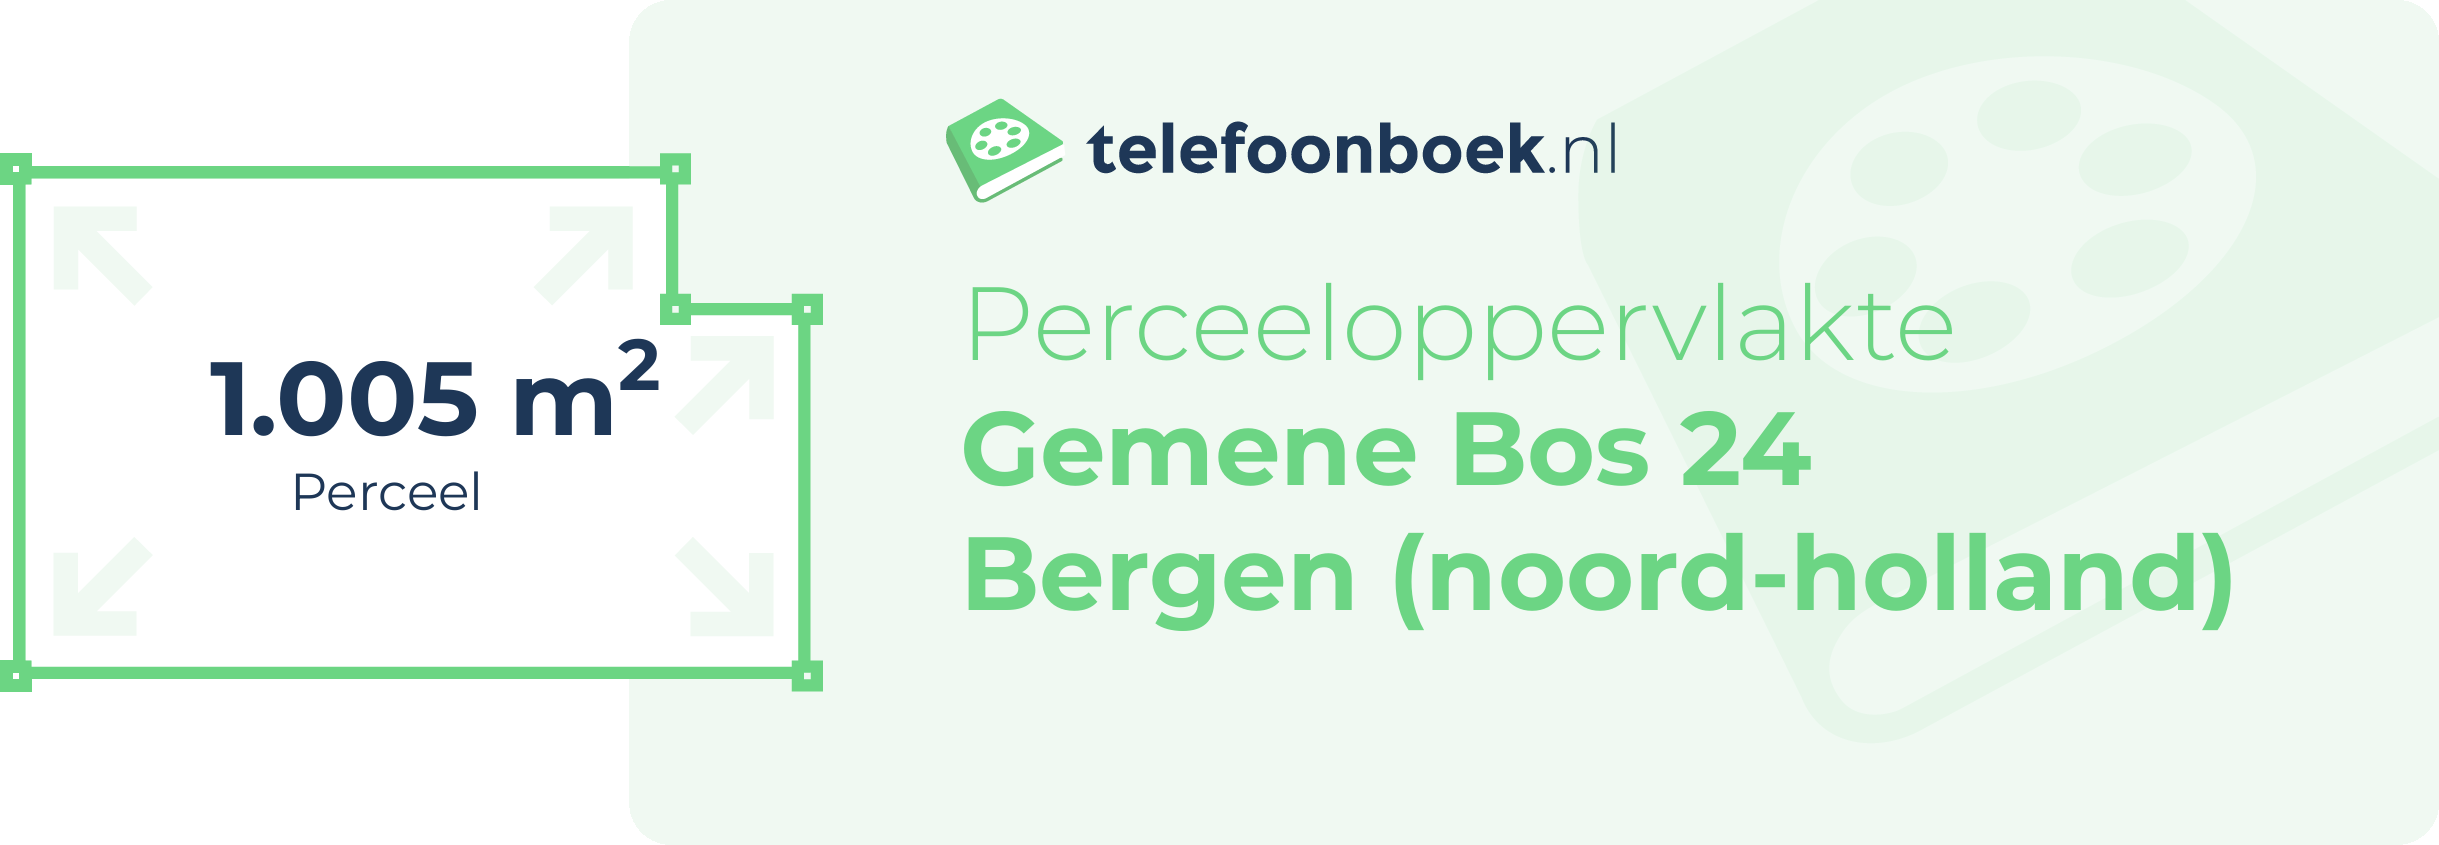 Perceeloppervlakte Gemene Bos 24 Bergen (Noord-Holland)